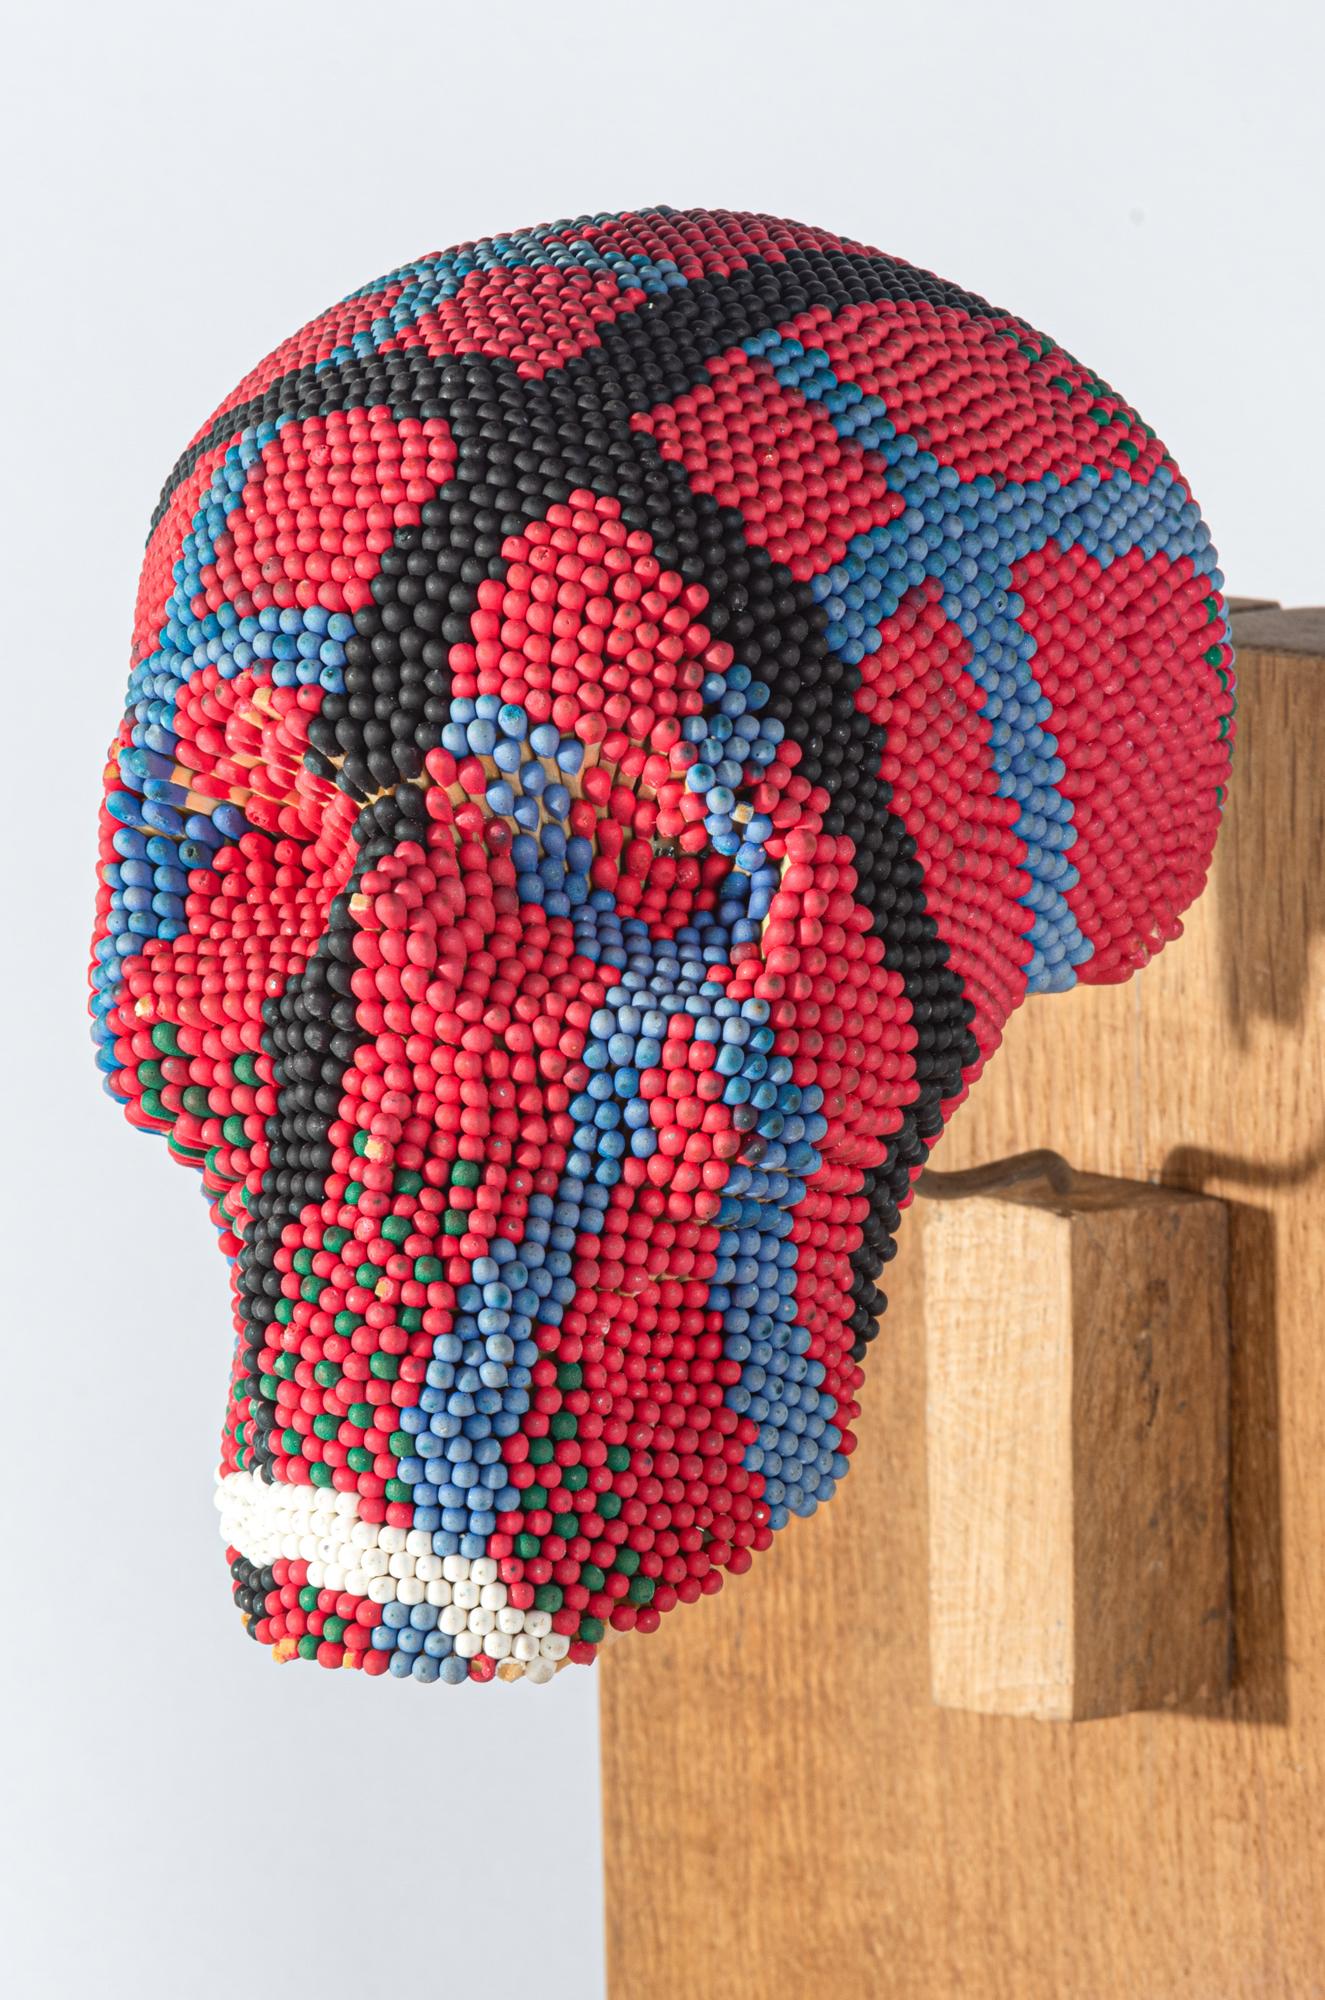 David Mach Abstract Sculpture - Skull